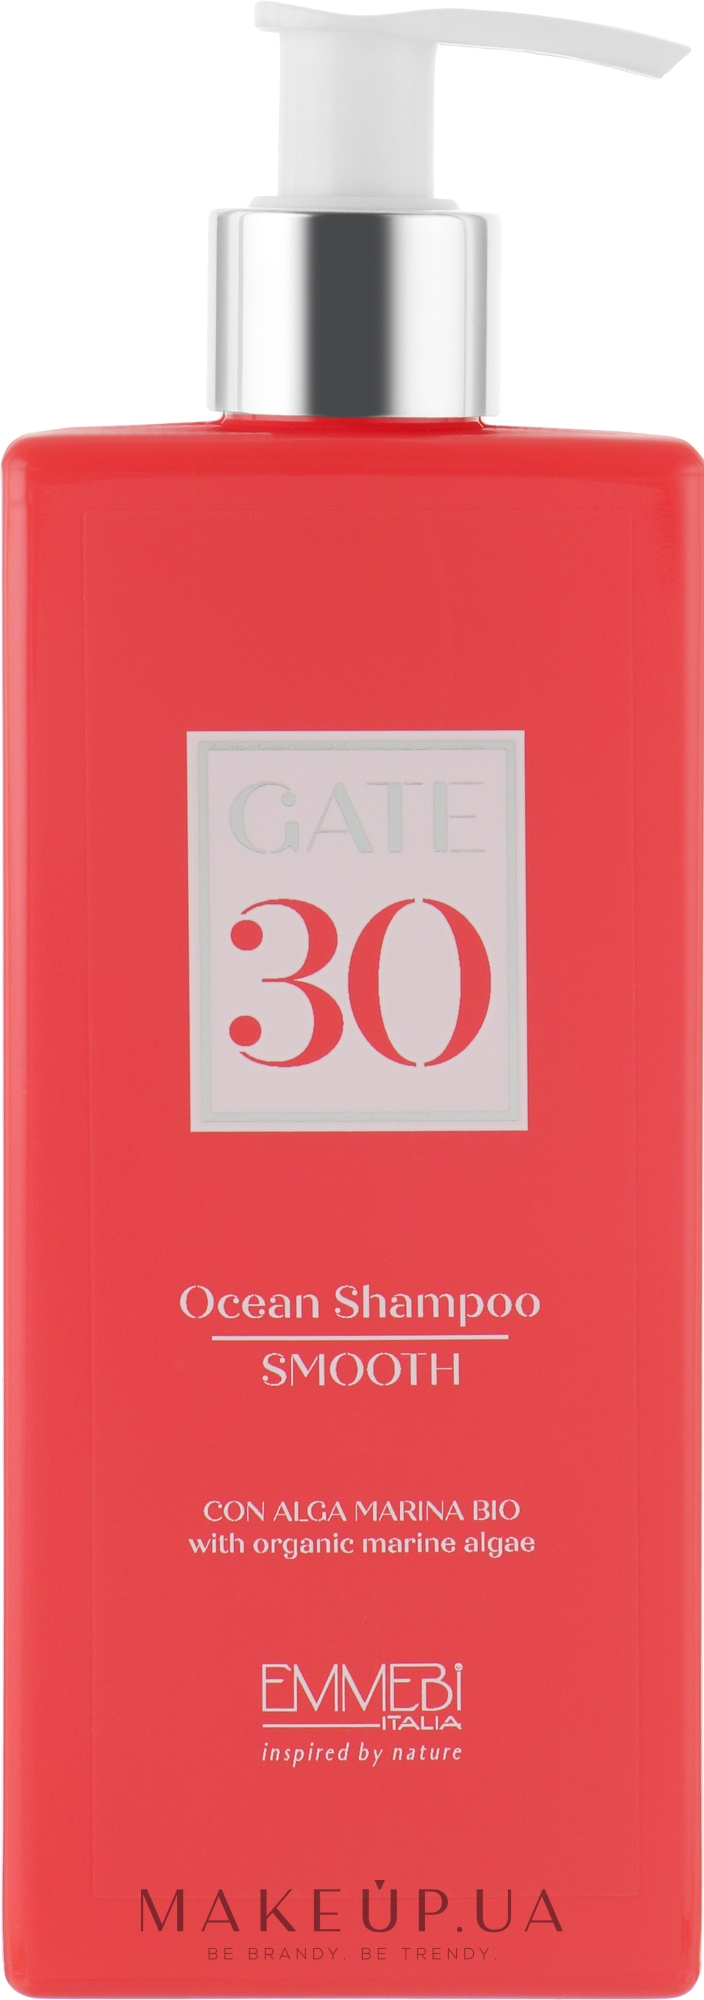 Выравнивающий шампунь для волос - Emmebi Italia Gate 30 Wash Ocean Shampoo Smooth — фото 250ml